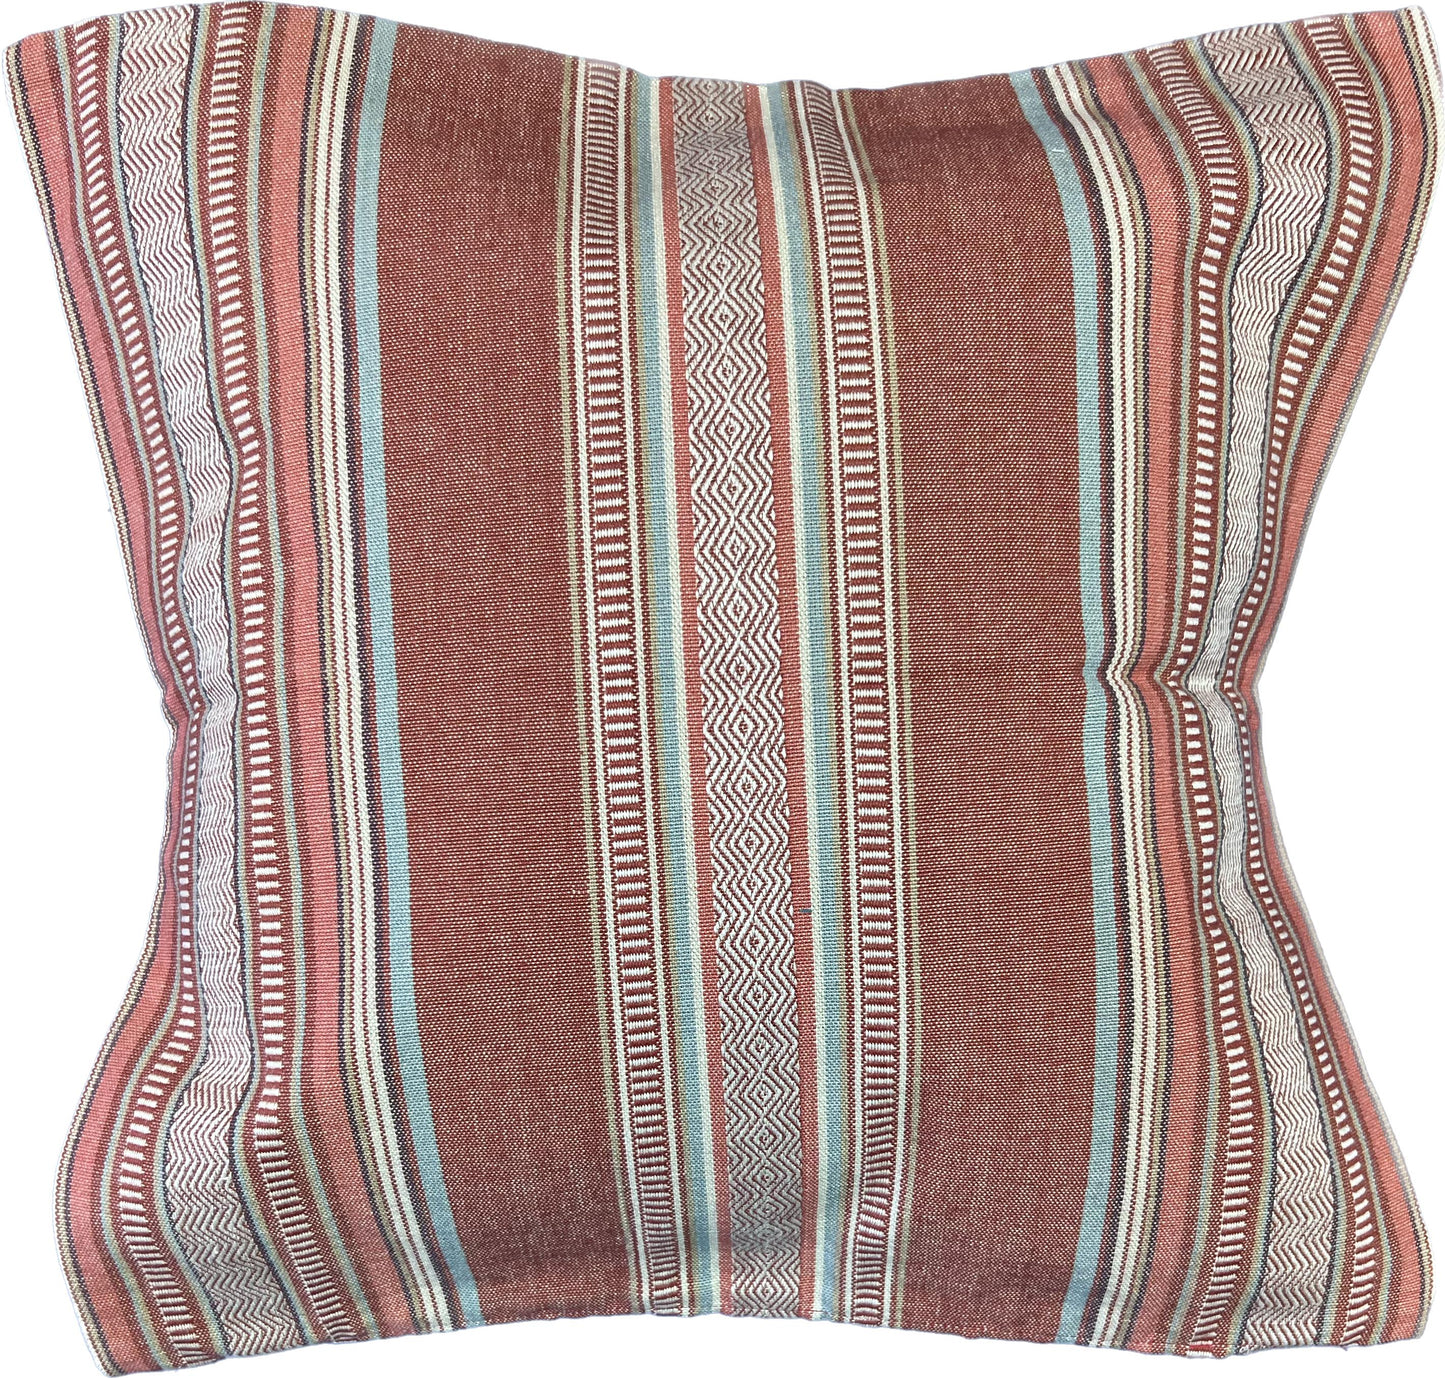 18"x18"  Stripe Pillow Cover